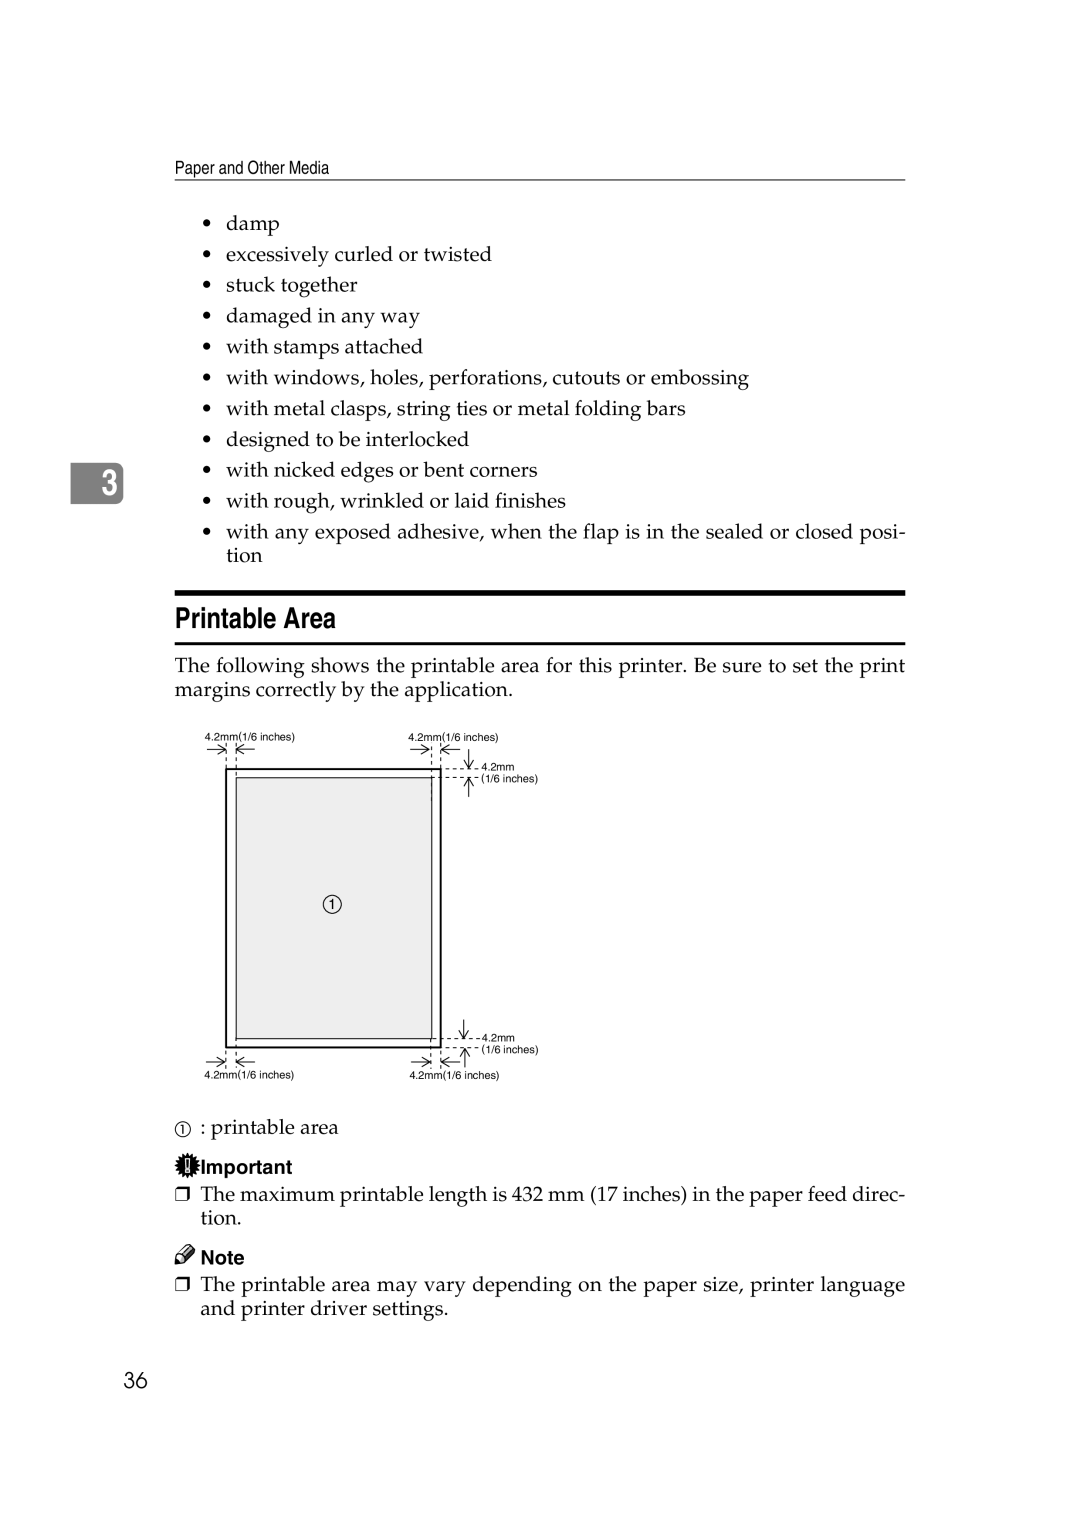 Lanier AP2610 manual Printable Area 